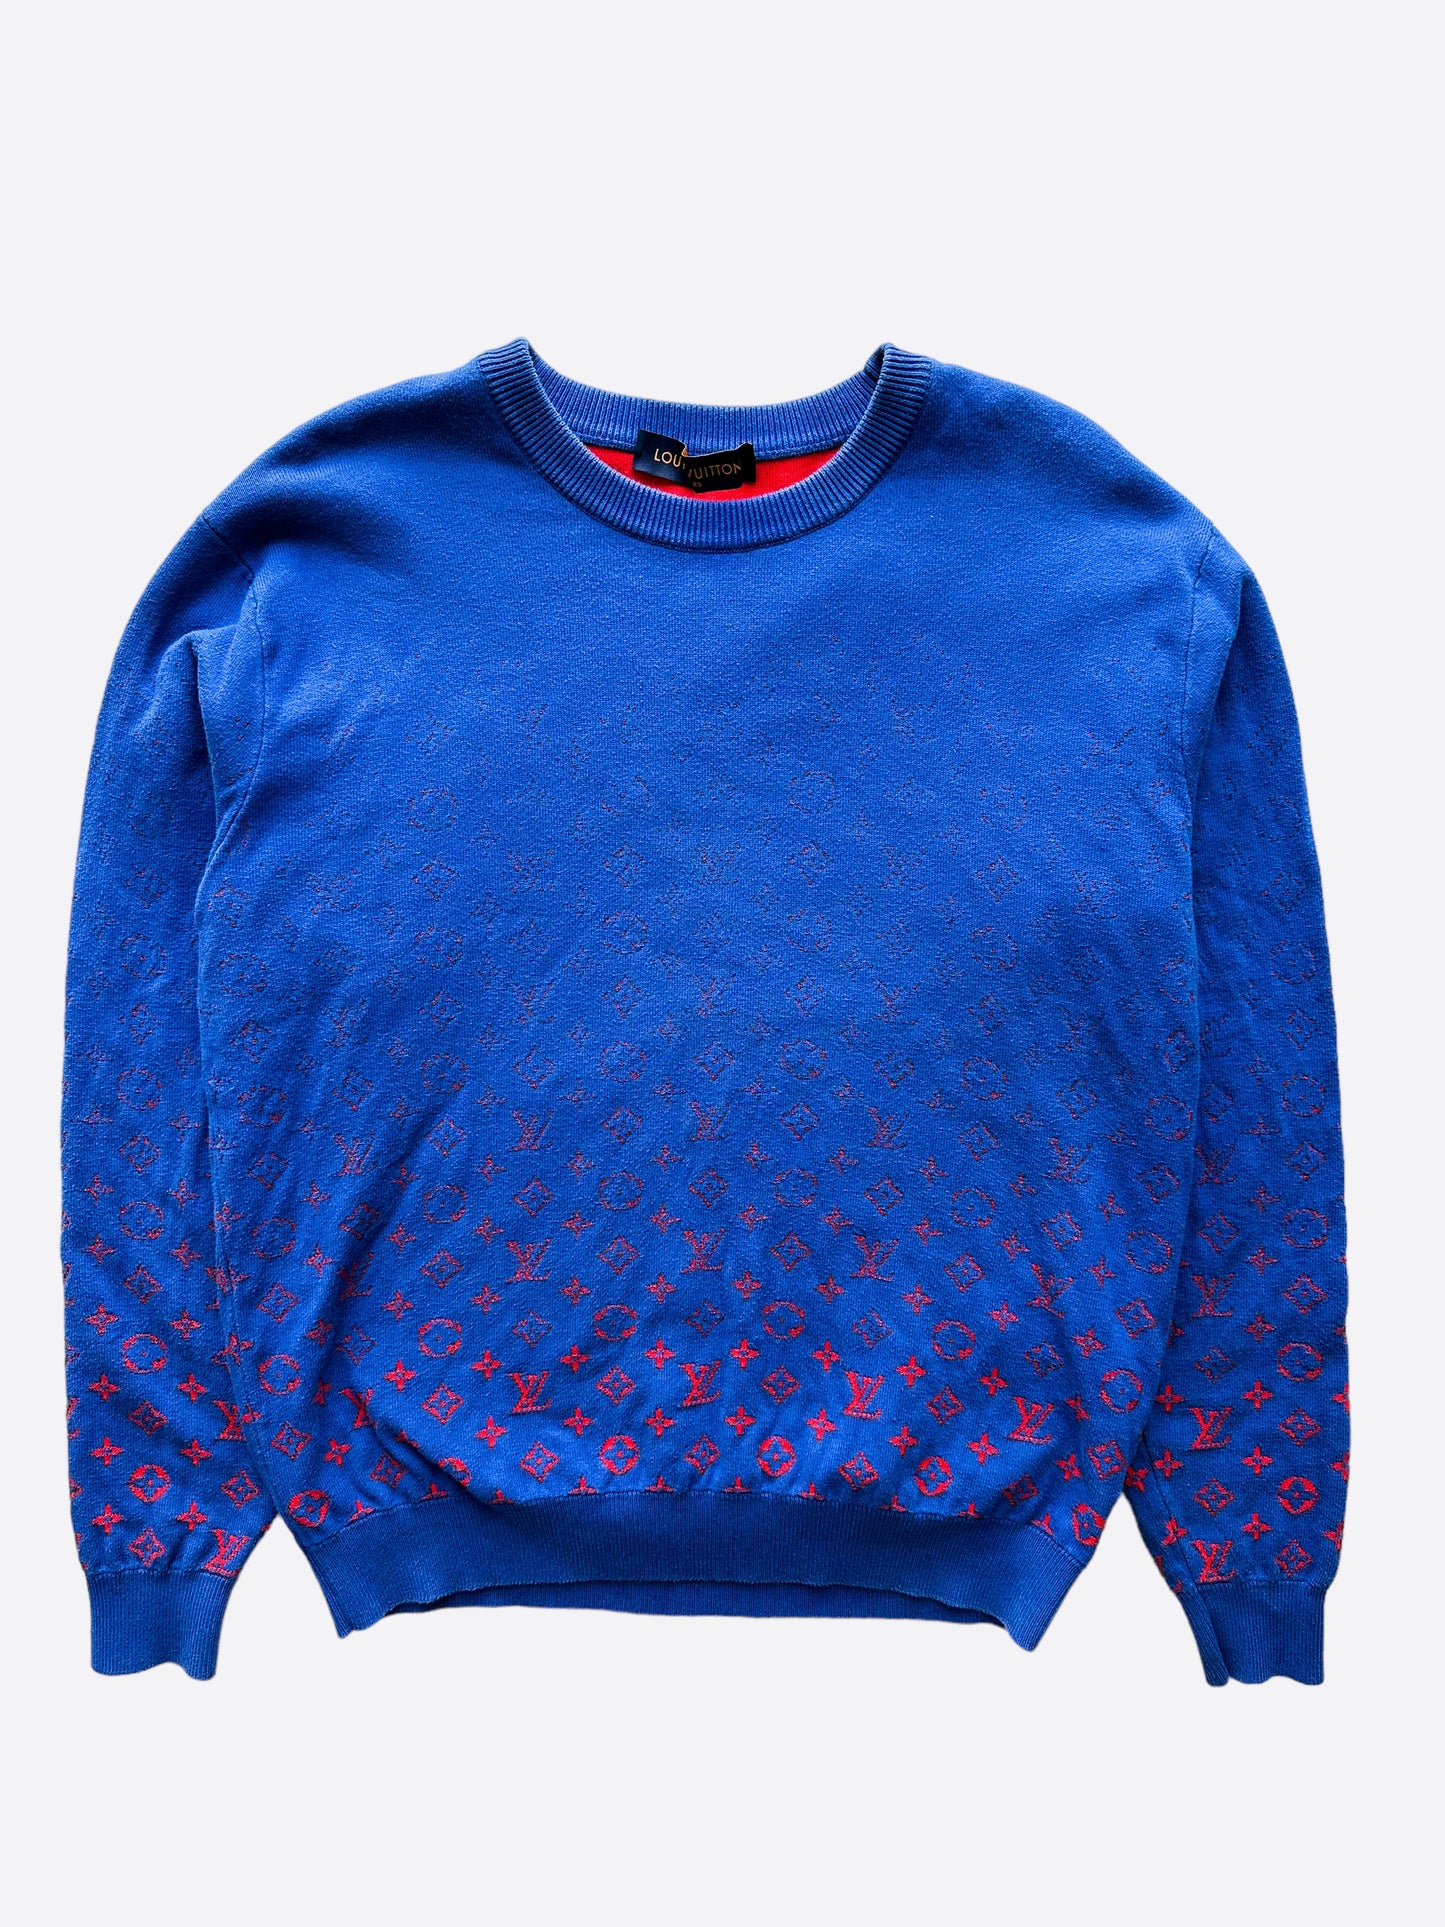 Louis Vuitton Colorful Monogram Sweater